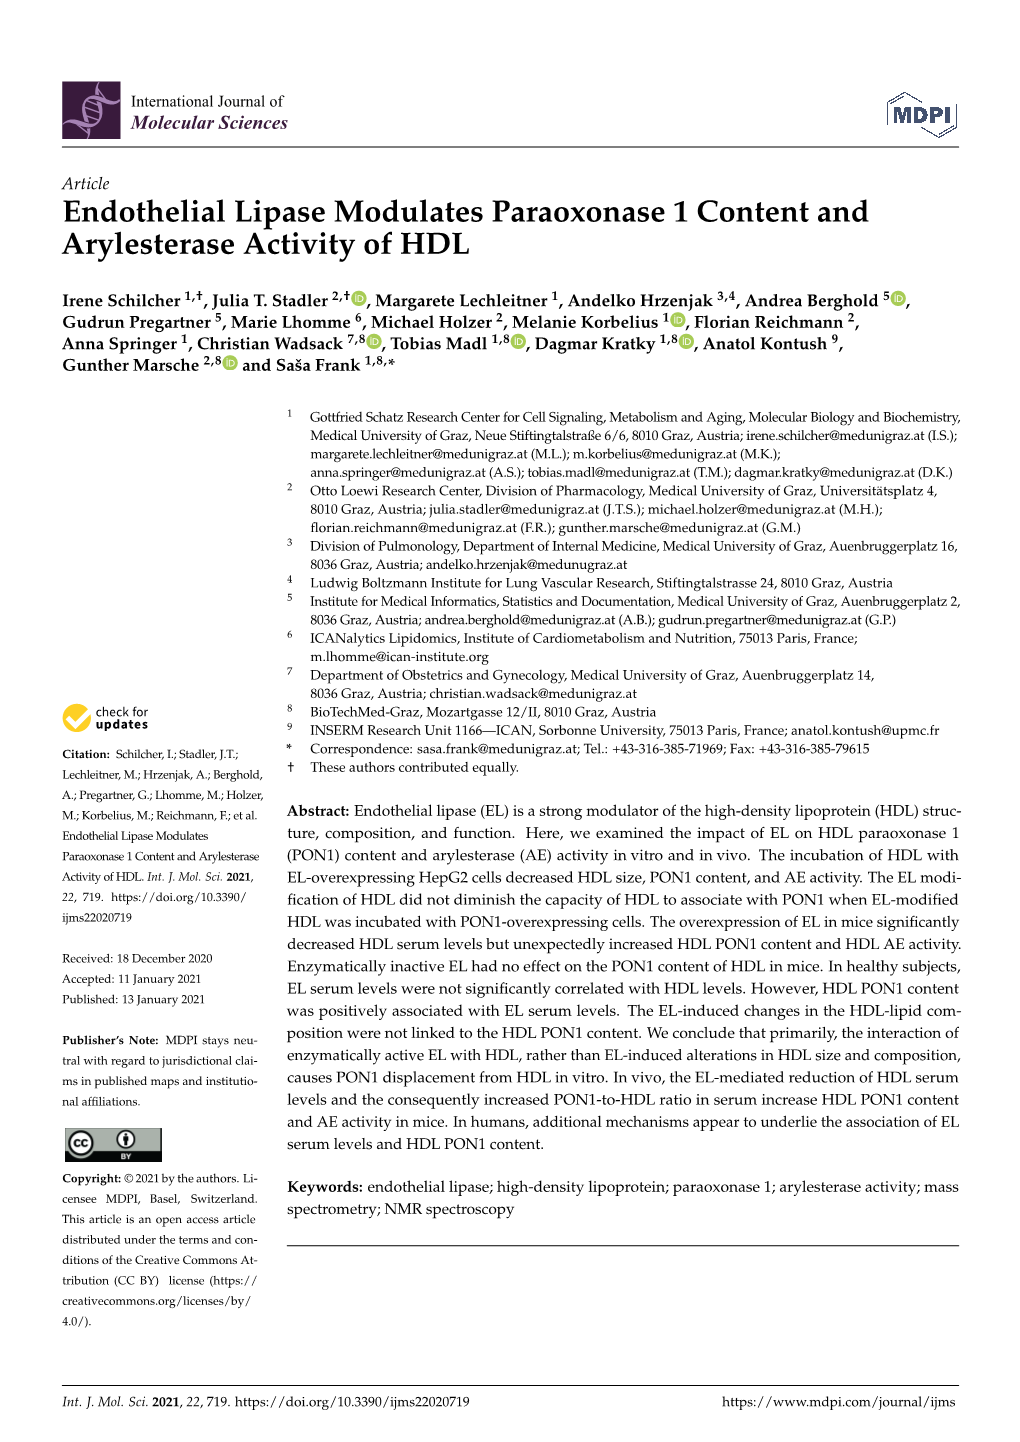 Endothelial Lipase Modulates Paraoxonase 1 Content and Arylesterase Activity of HDL